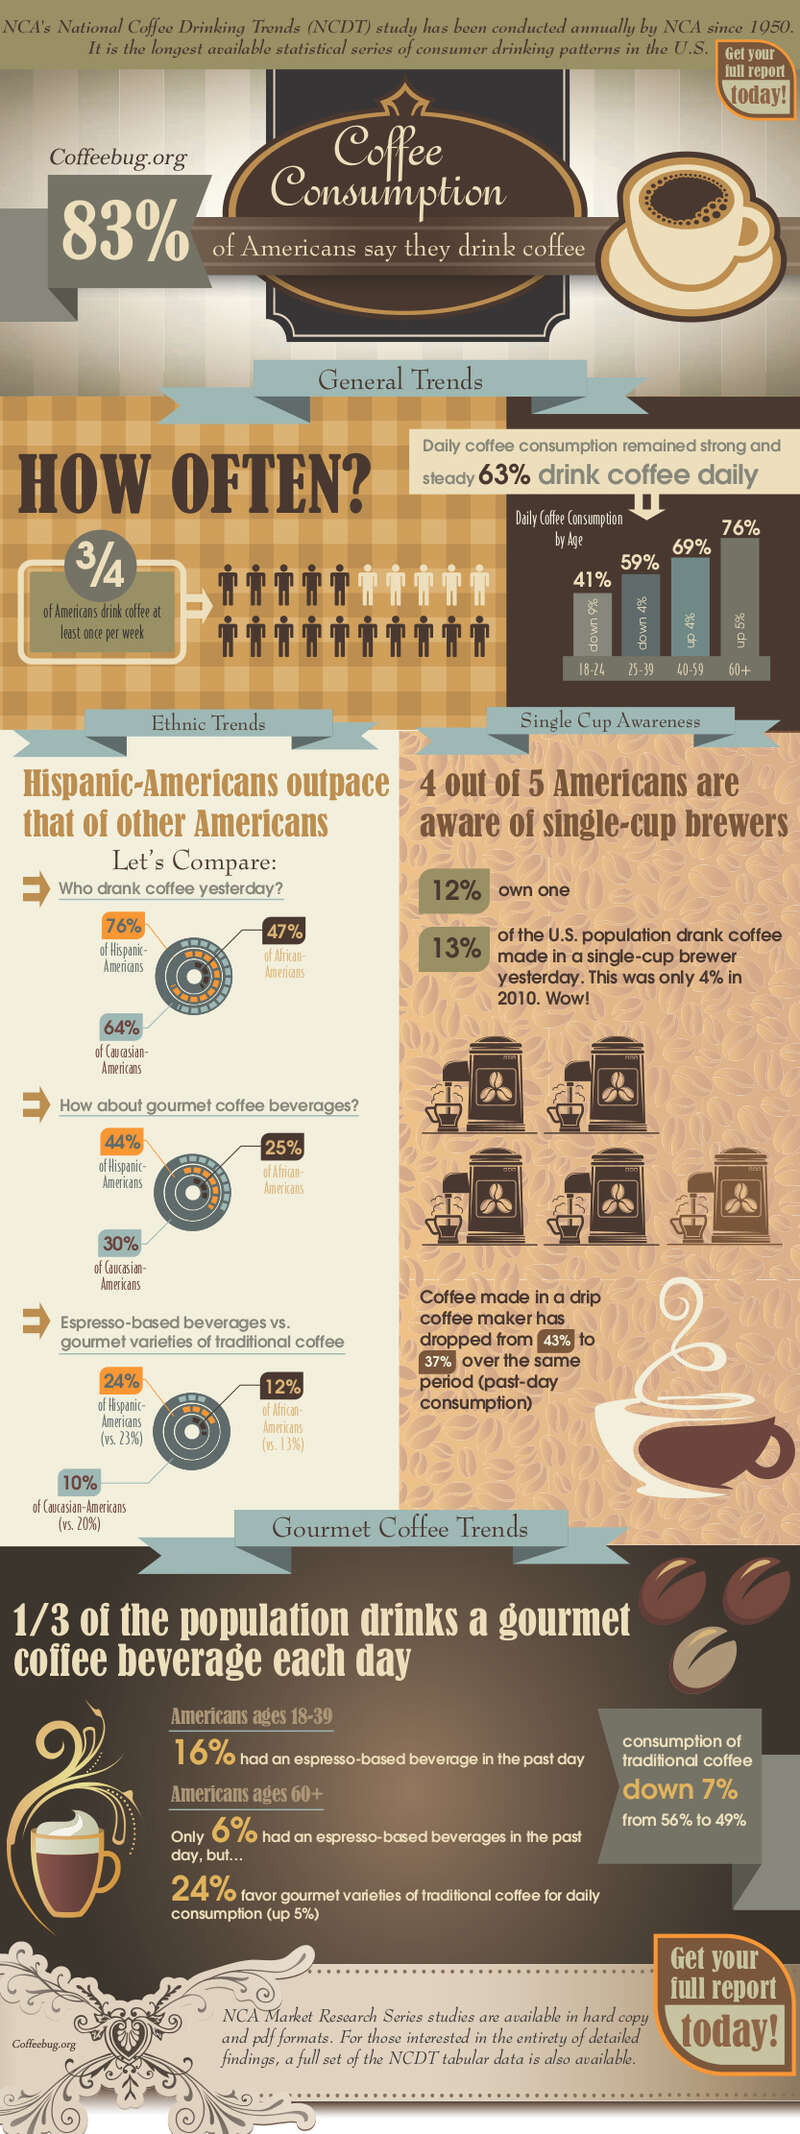 2013 National Coffee Drinking Trends 2013 年美国咖啡饮用量趋势 数据可视化报告